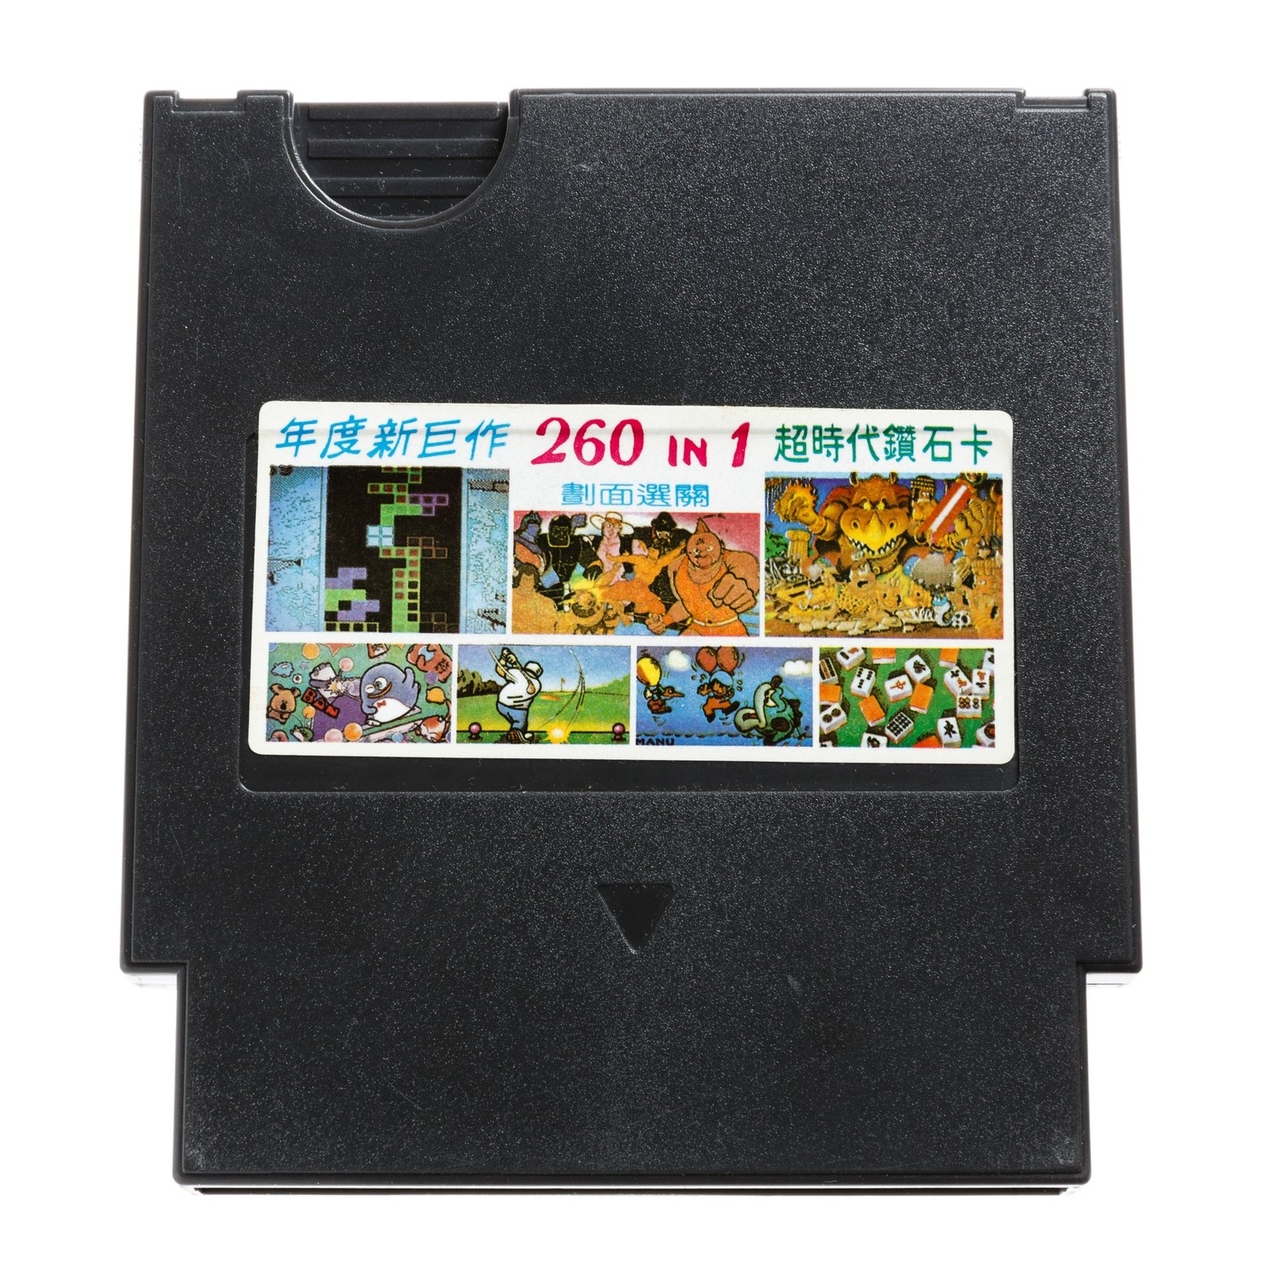 260 in 1 Black (NTSC Pirate) - Nintendo NES Games